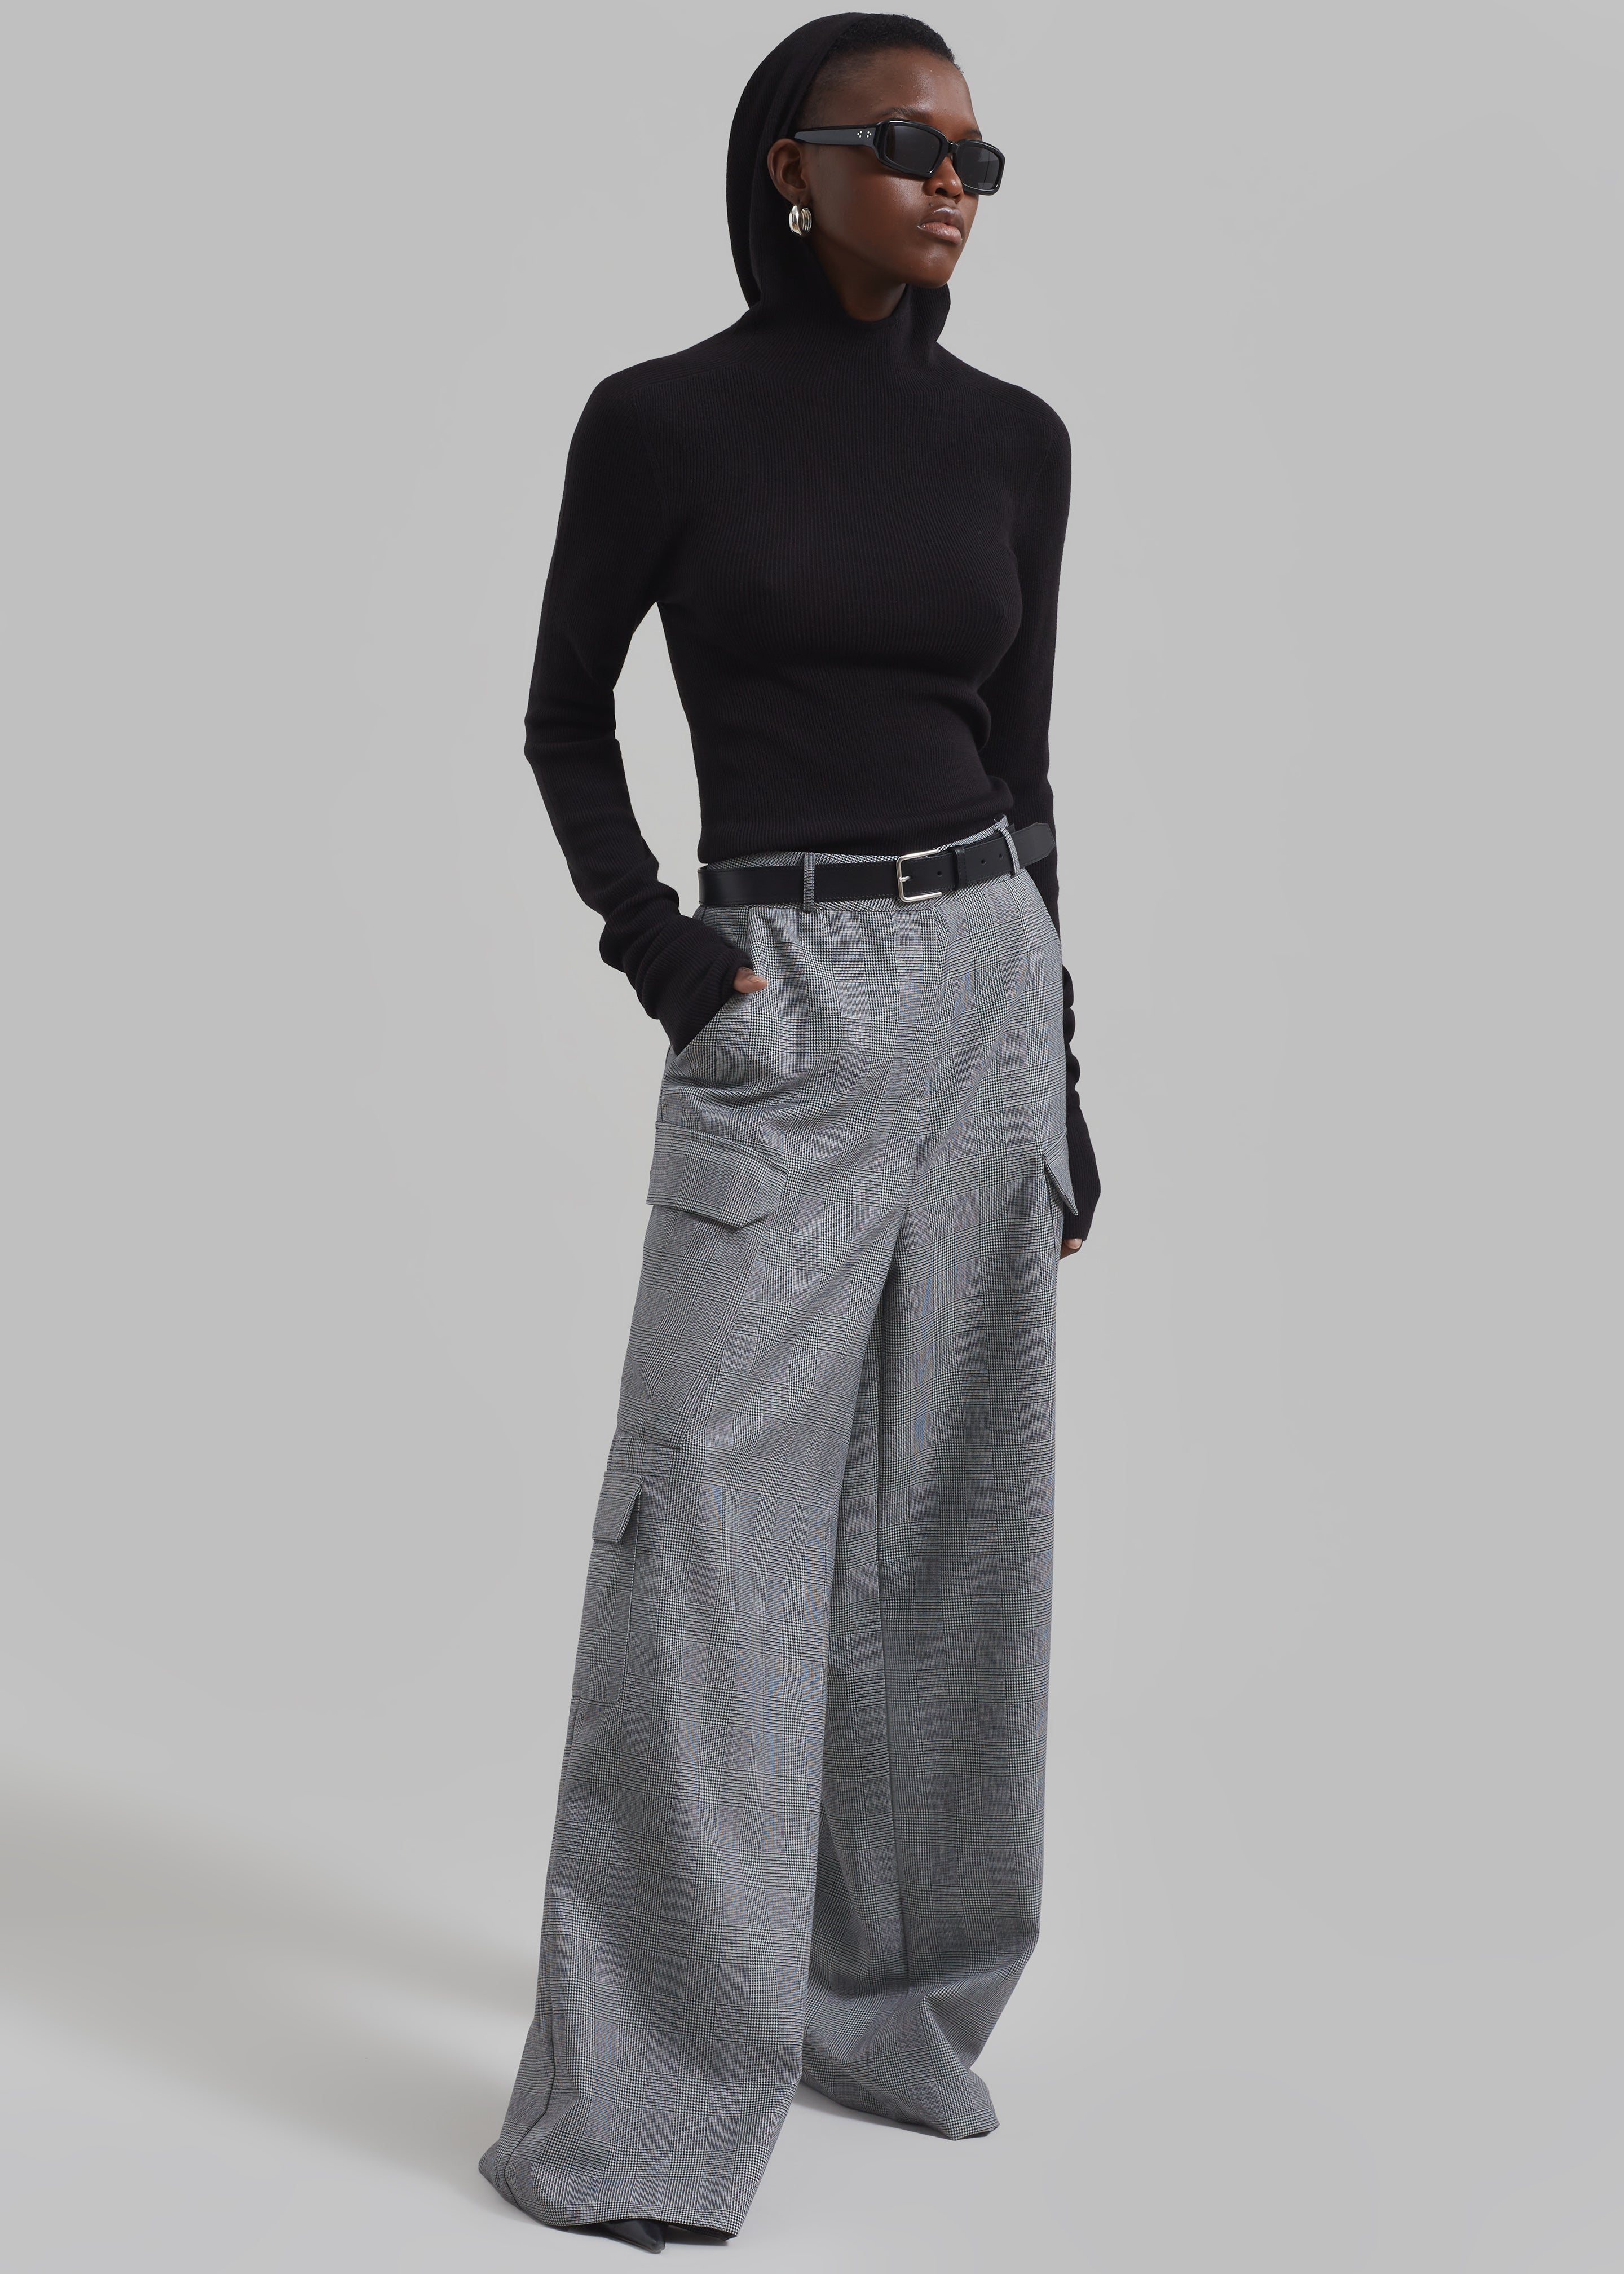 Zara, Pants & Jumpsuits, Zara Cargo Cotton Blend Trousers Pants Light  Beige Size Small